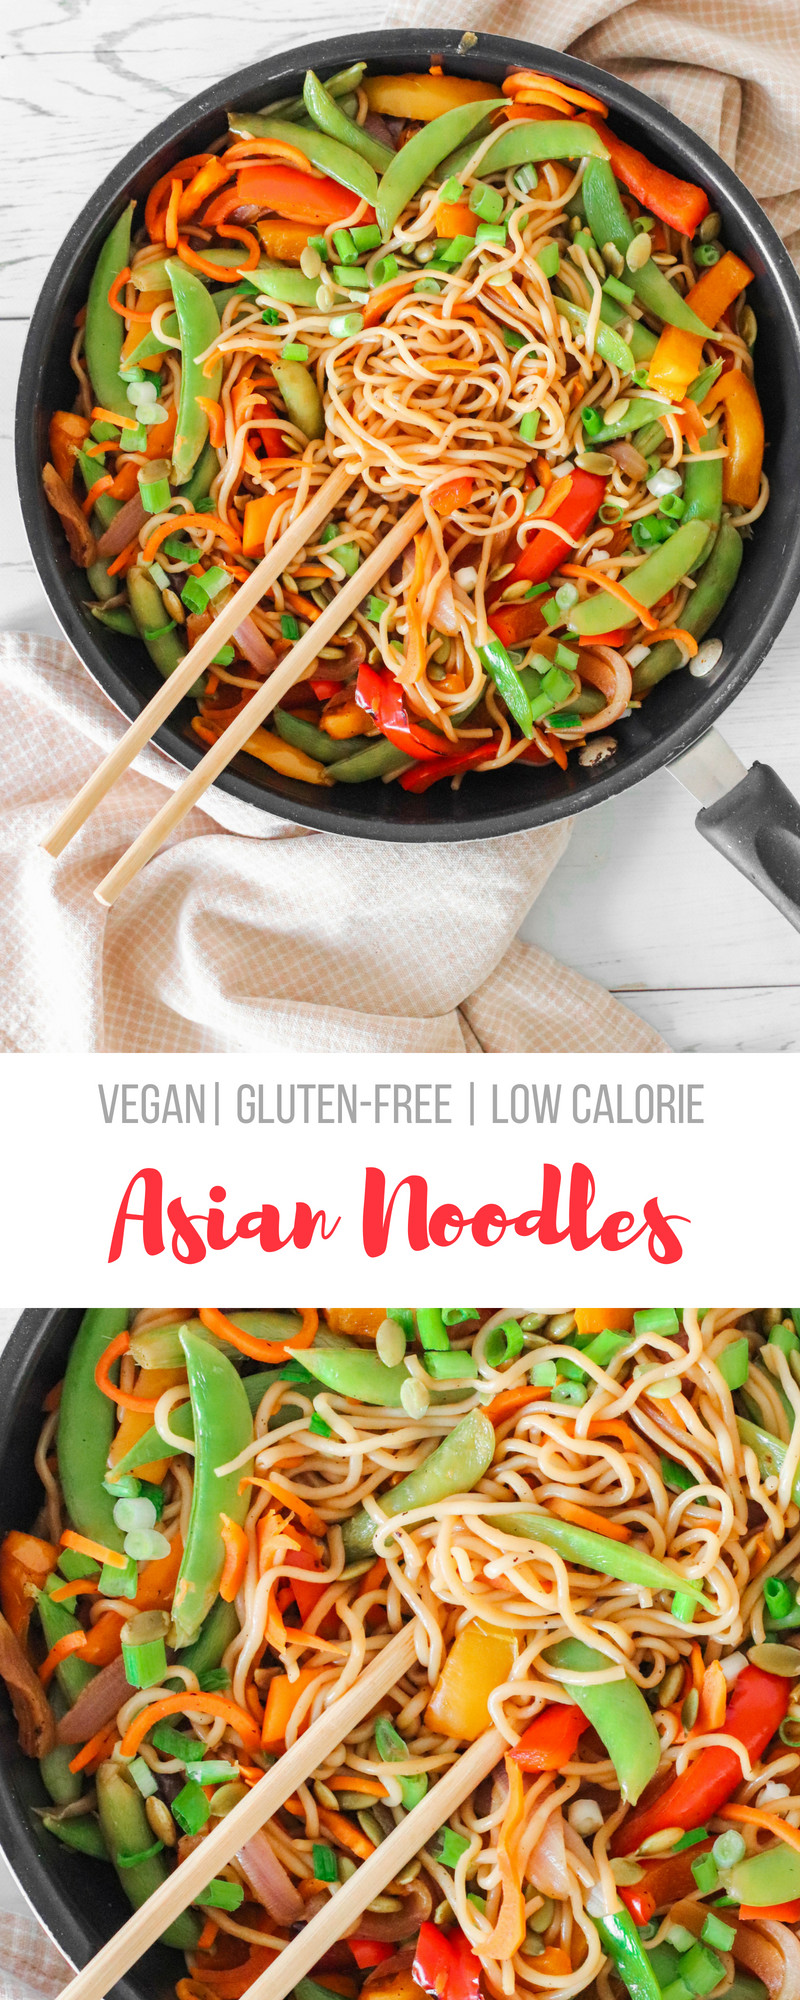 Low Calorie Asian Recipes
 Asian noodles Recipe low cal vegan